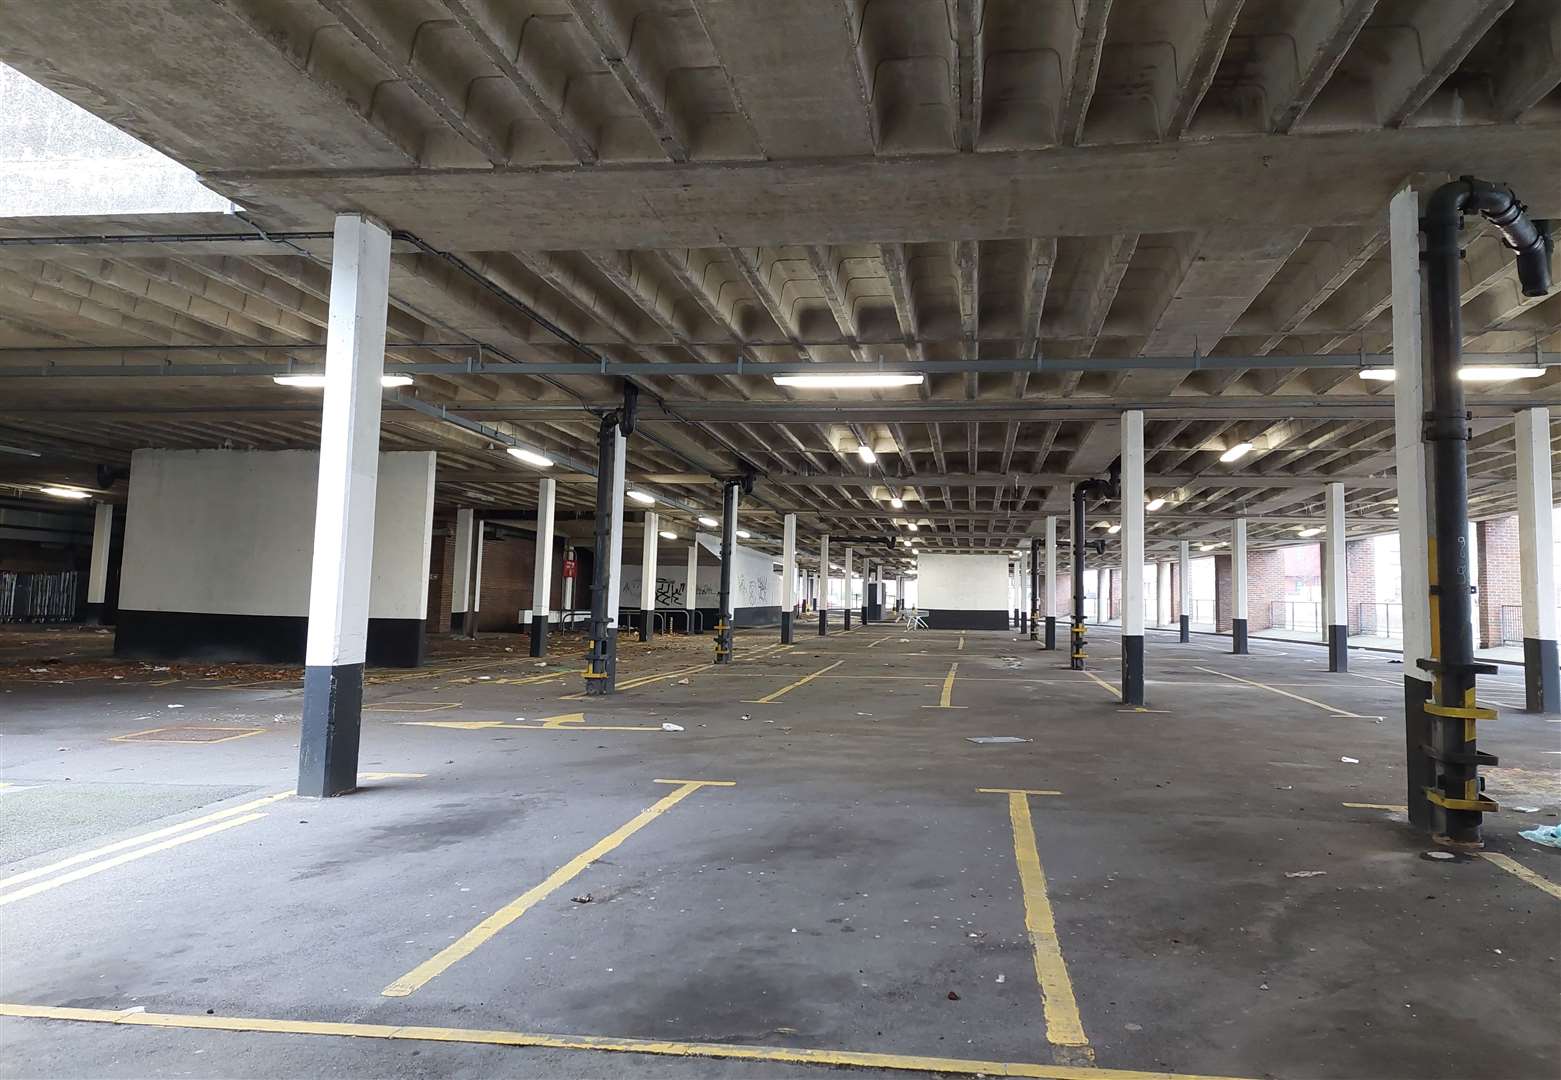 The car park goes across two floors